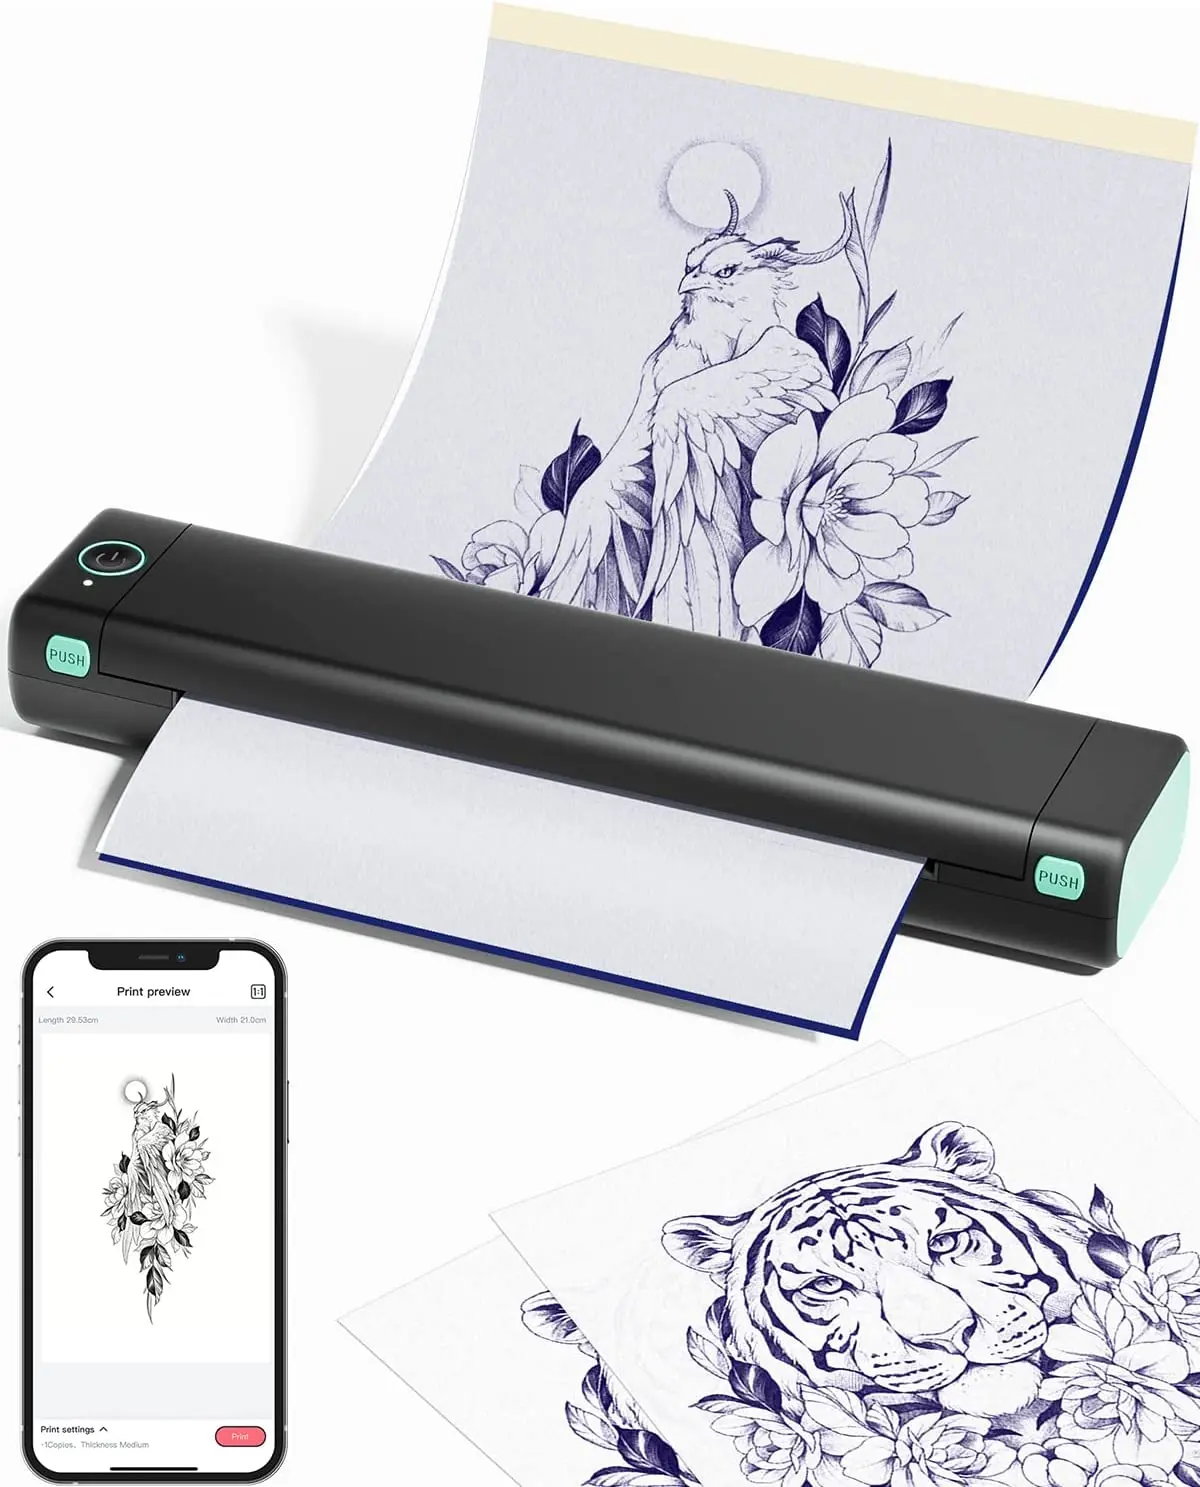 Wireless Portable A4 Size Thermal Tattoo Transfer Machine Tattoo Printer